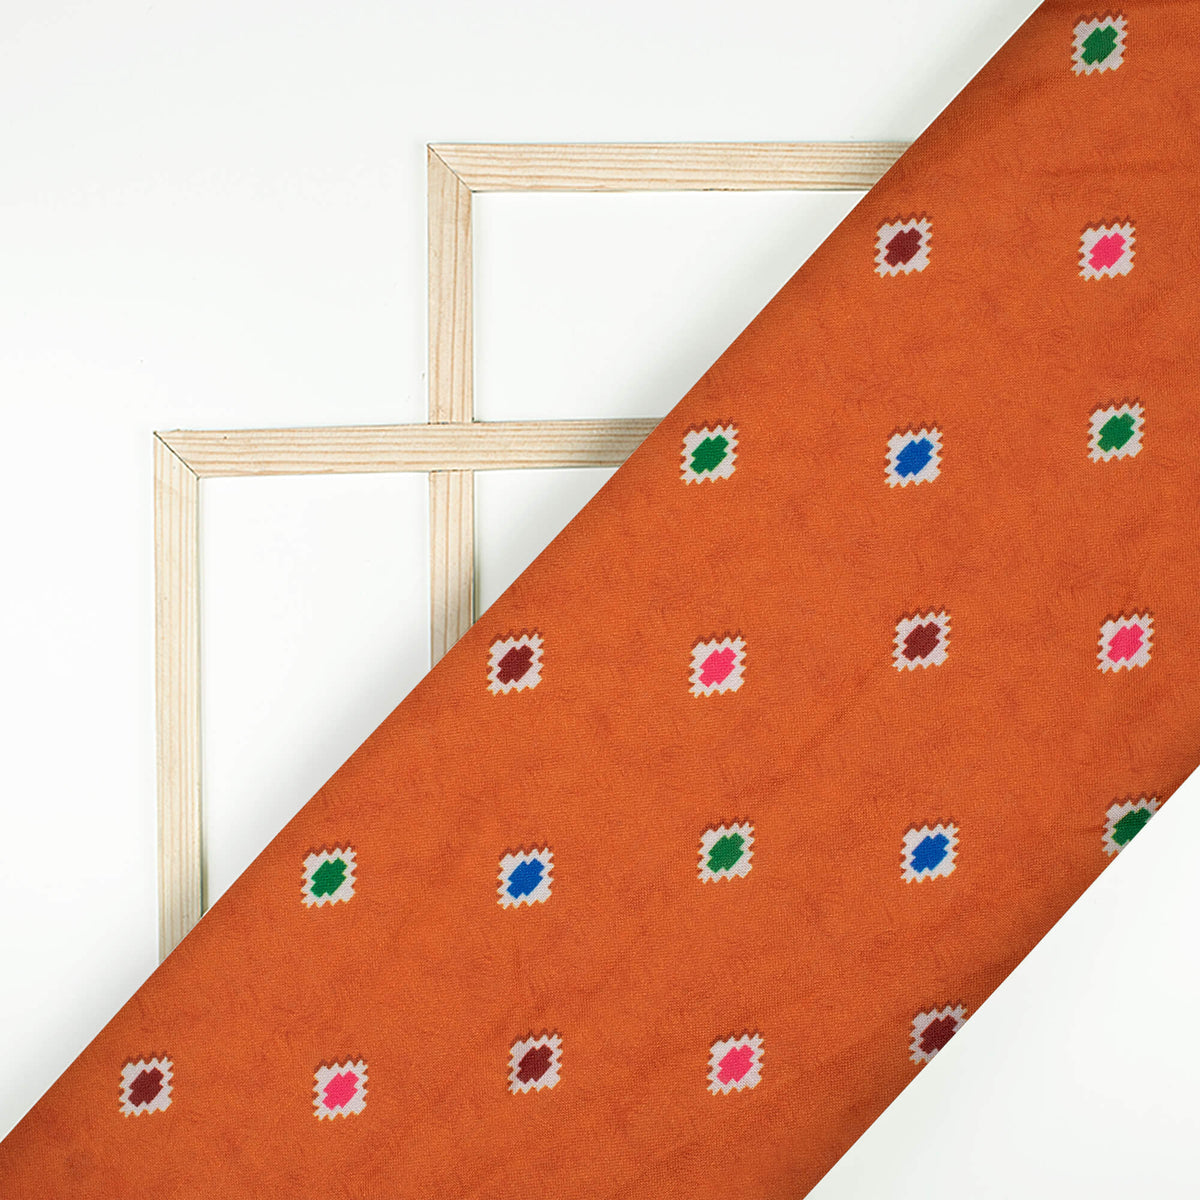 Burnt Orange And Blue Geometric Pattern Digital Print Linen Textured Fabric (Width 56 Inches)